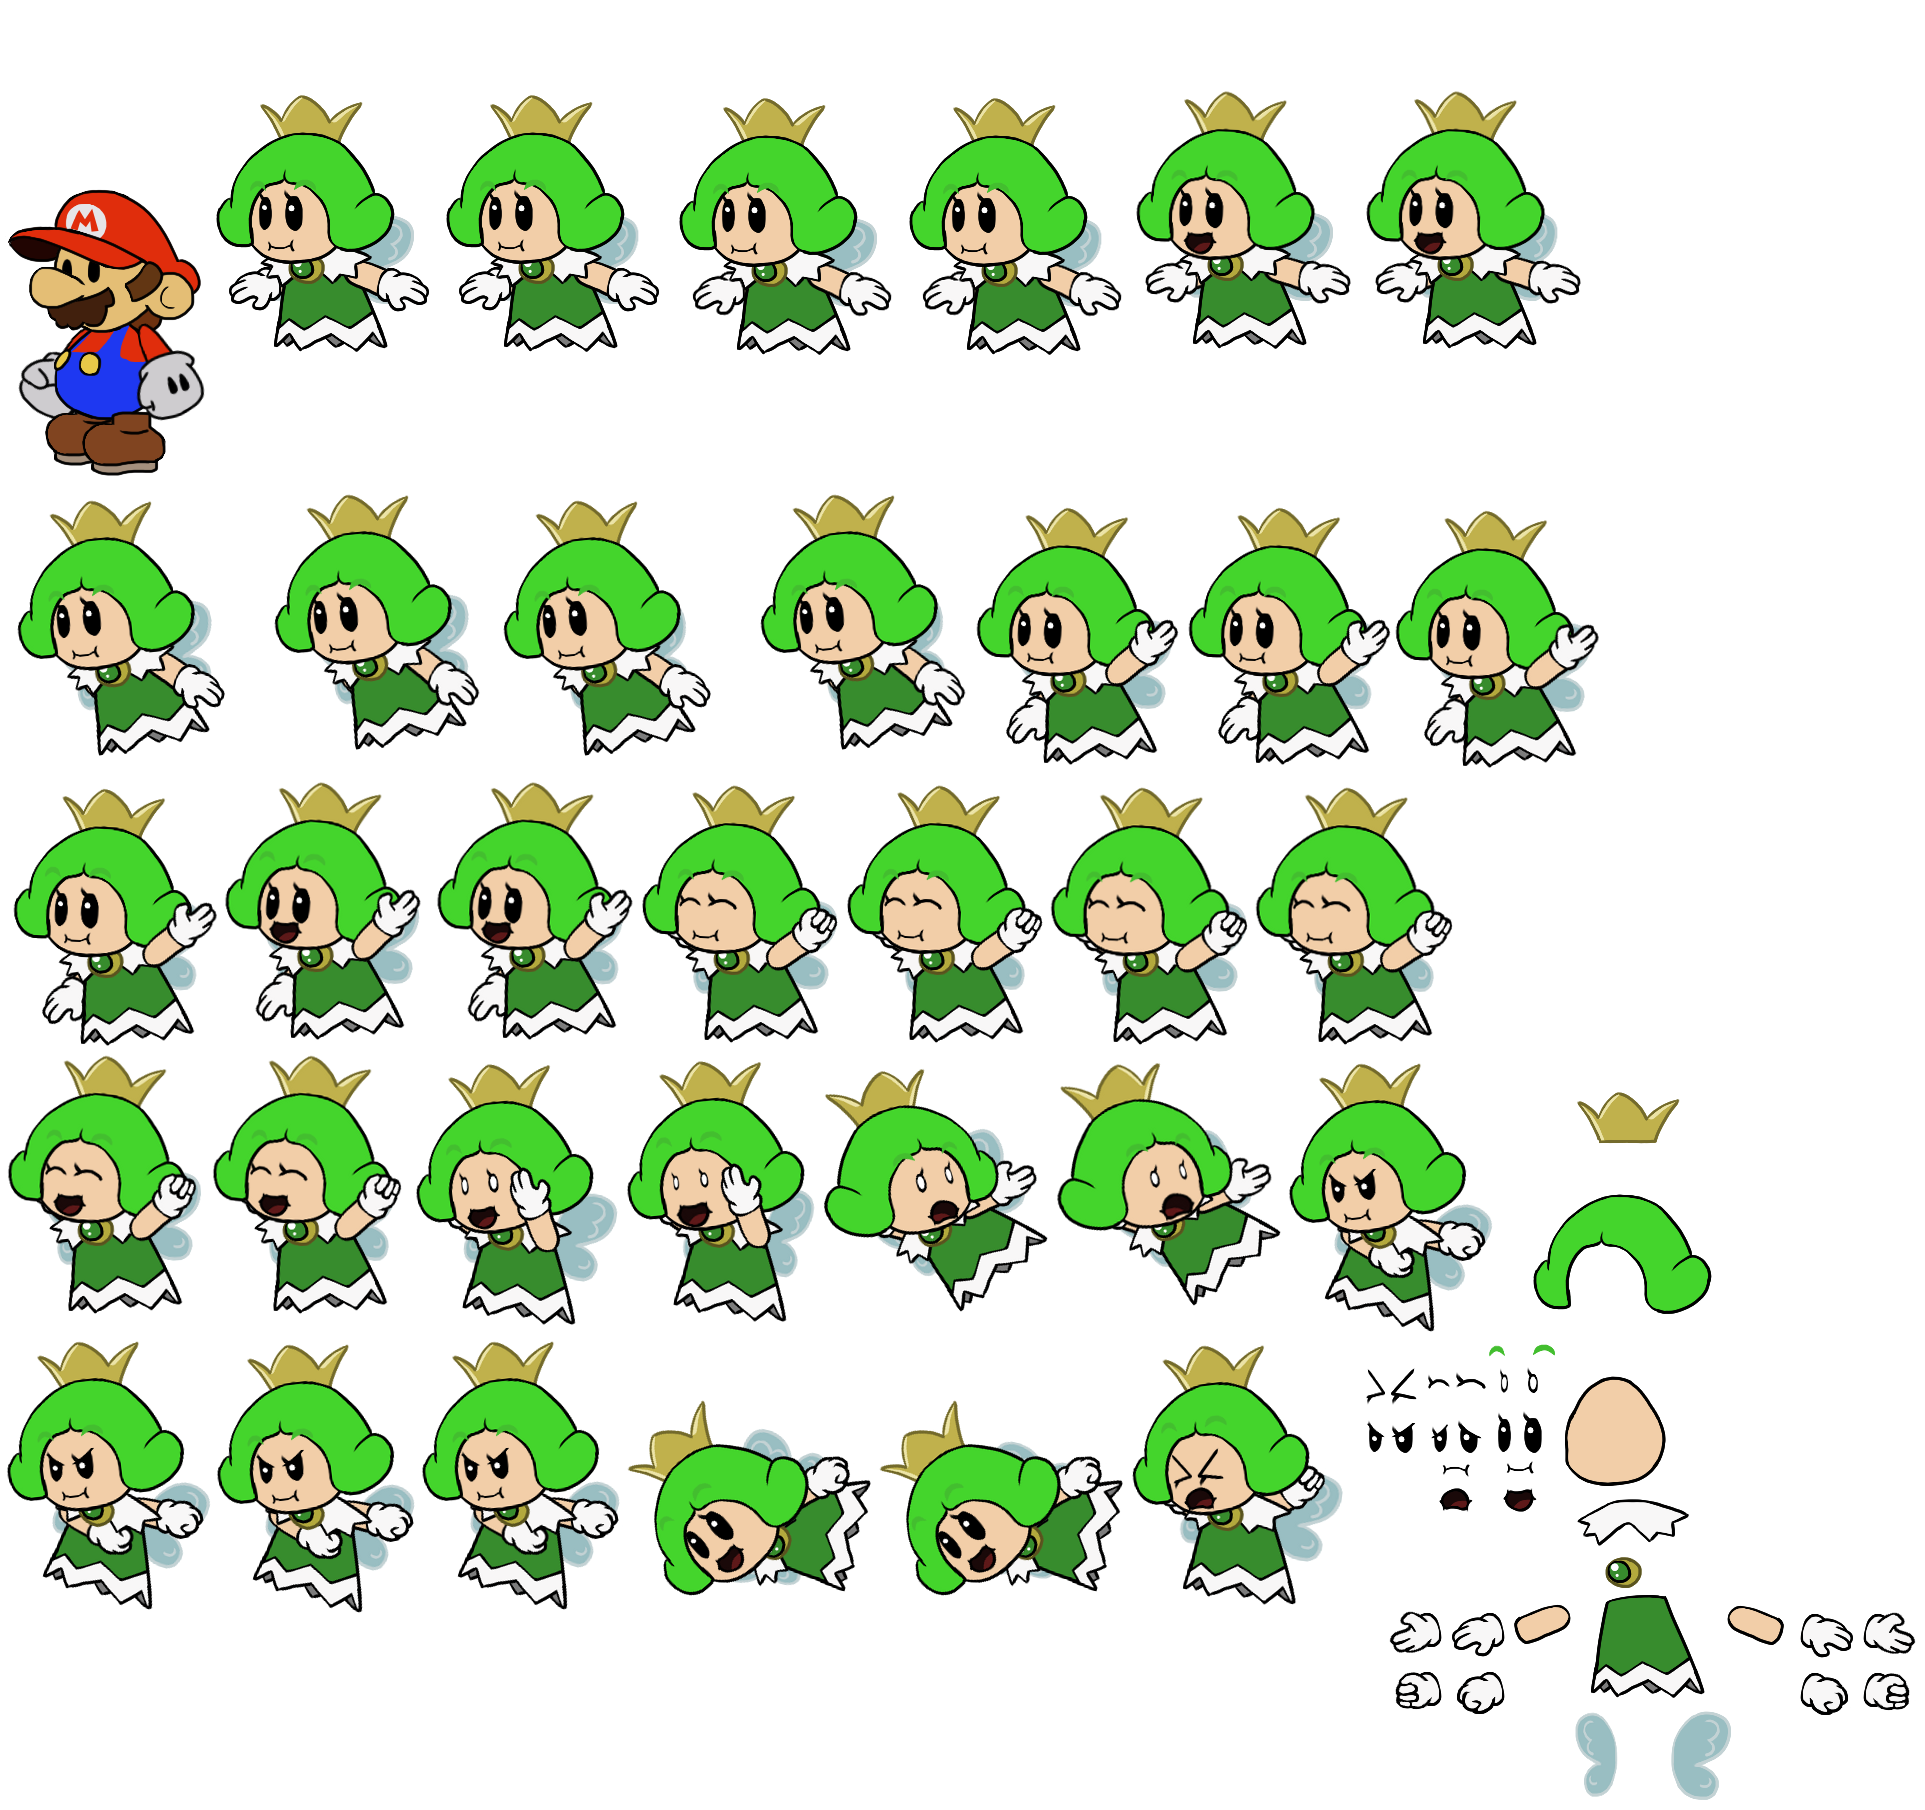 Green Sprixie Princess (Paper Mario-Style)